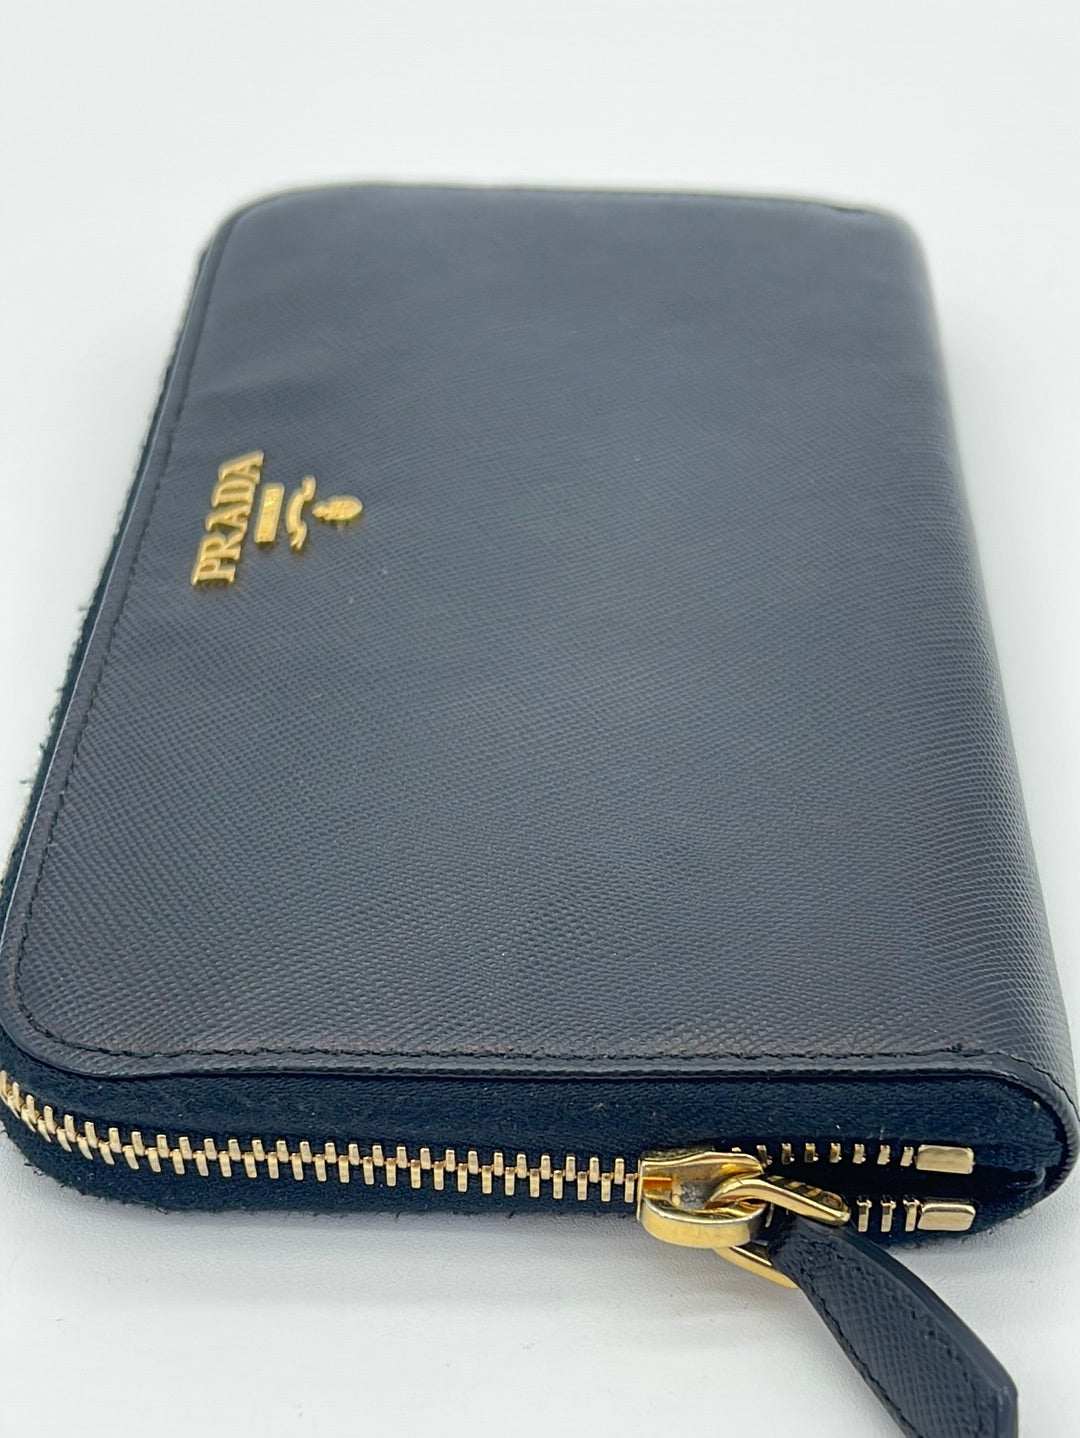 Black saffiano leather zip-around card case